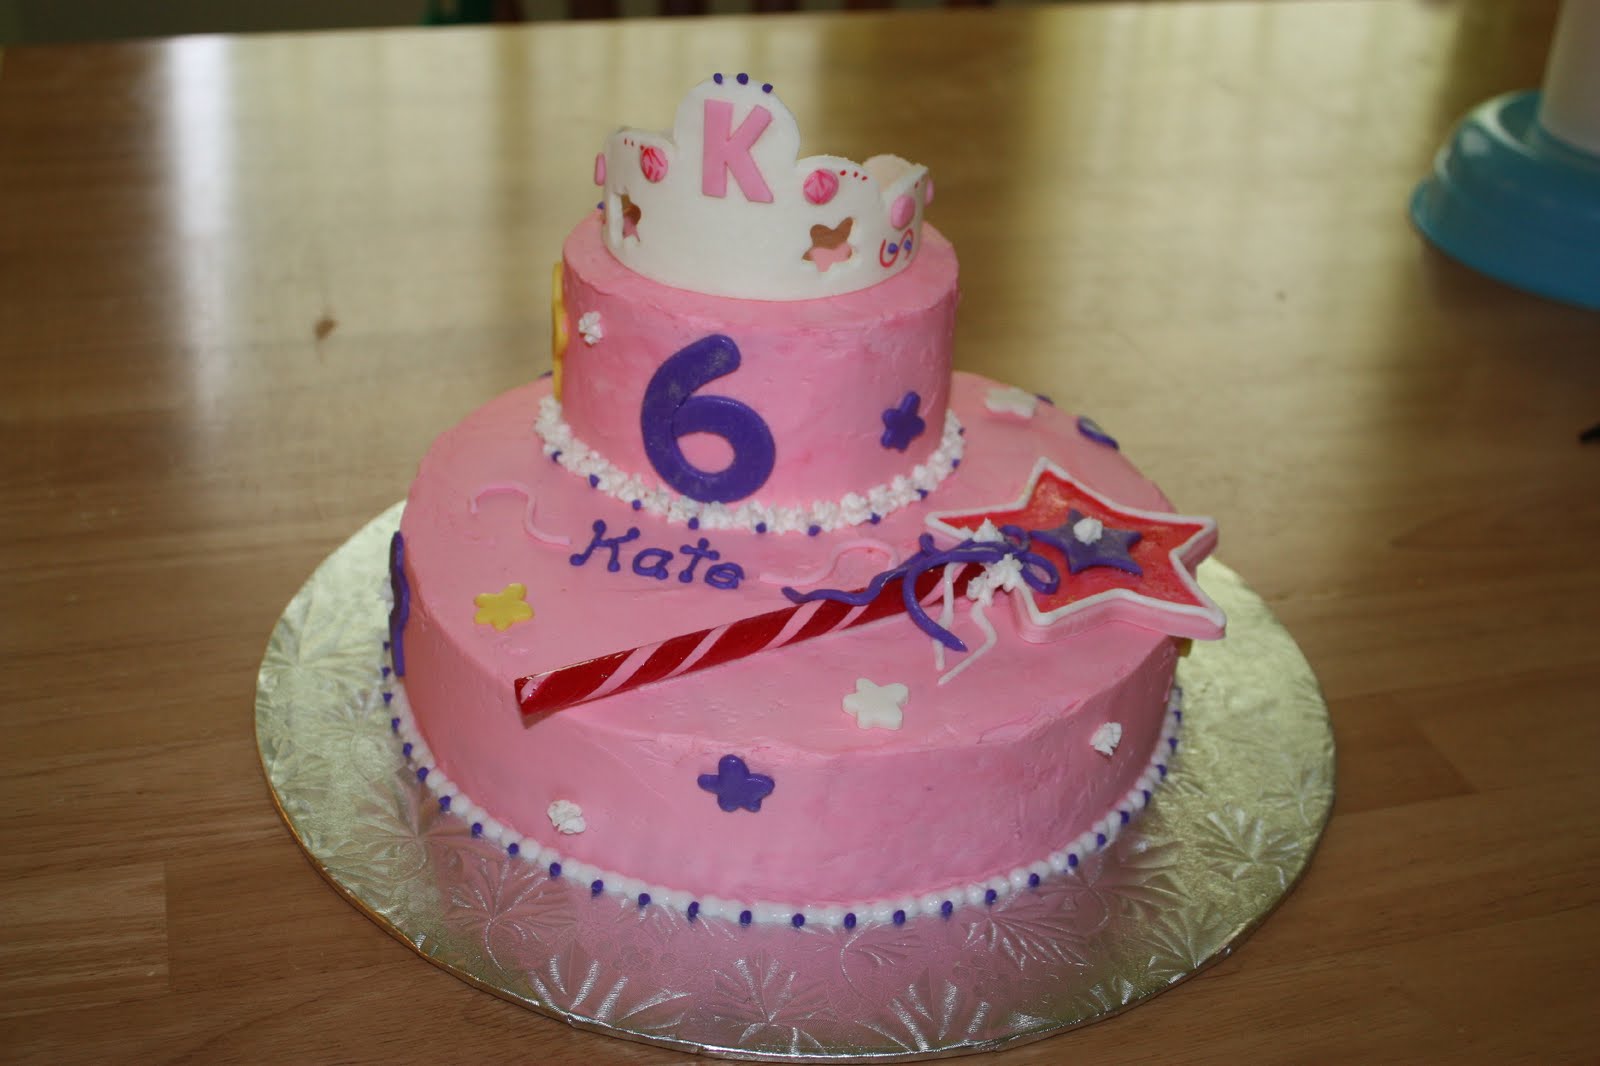 6 Year Old Girl Birthday Cake - A Birthday Cake